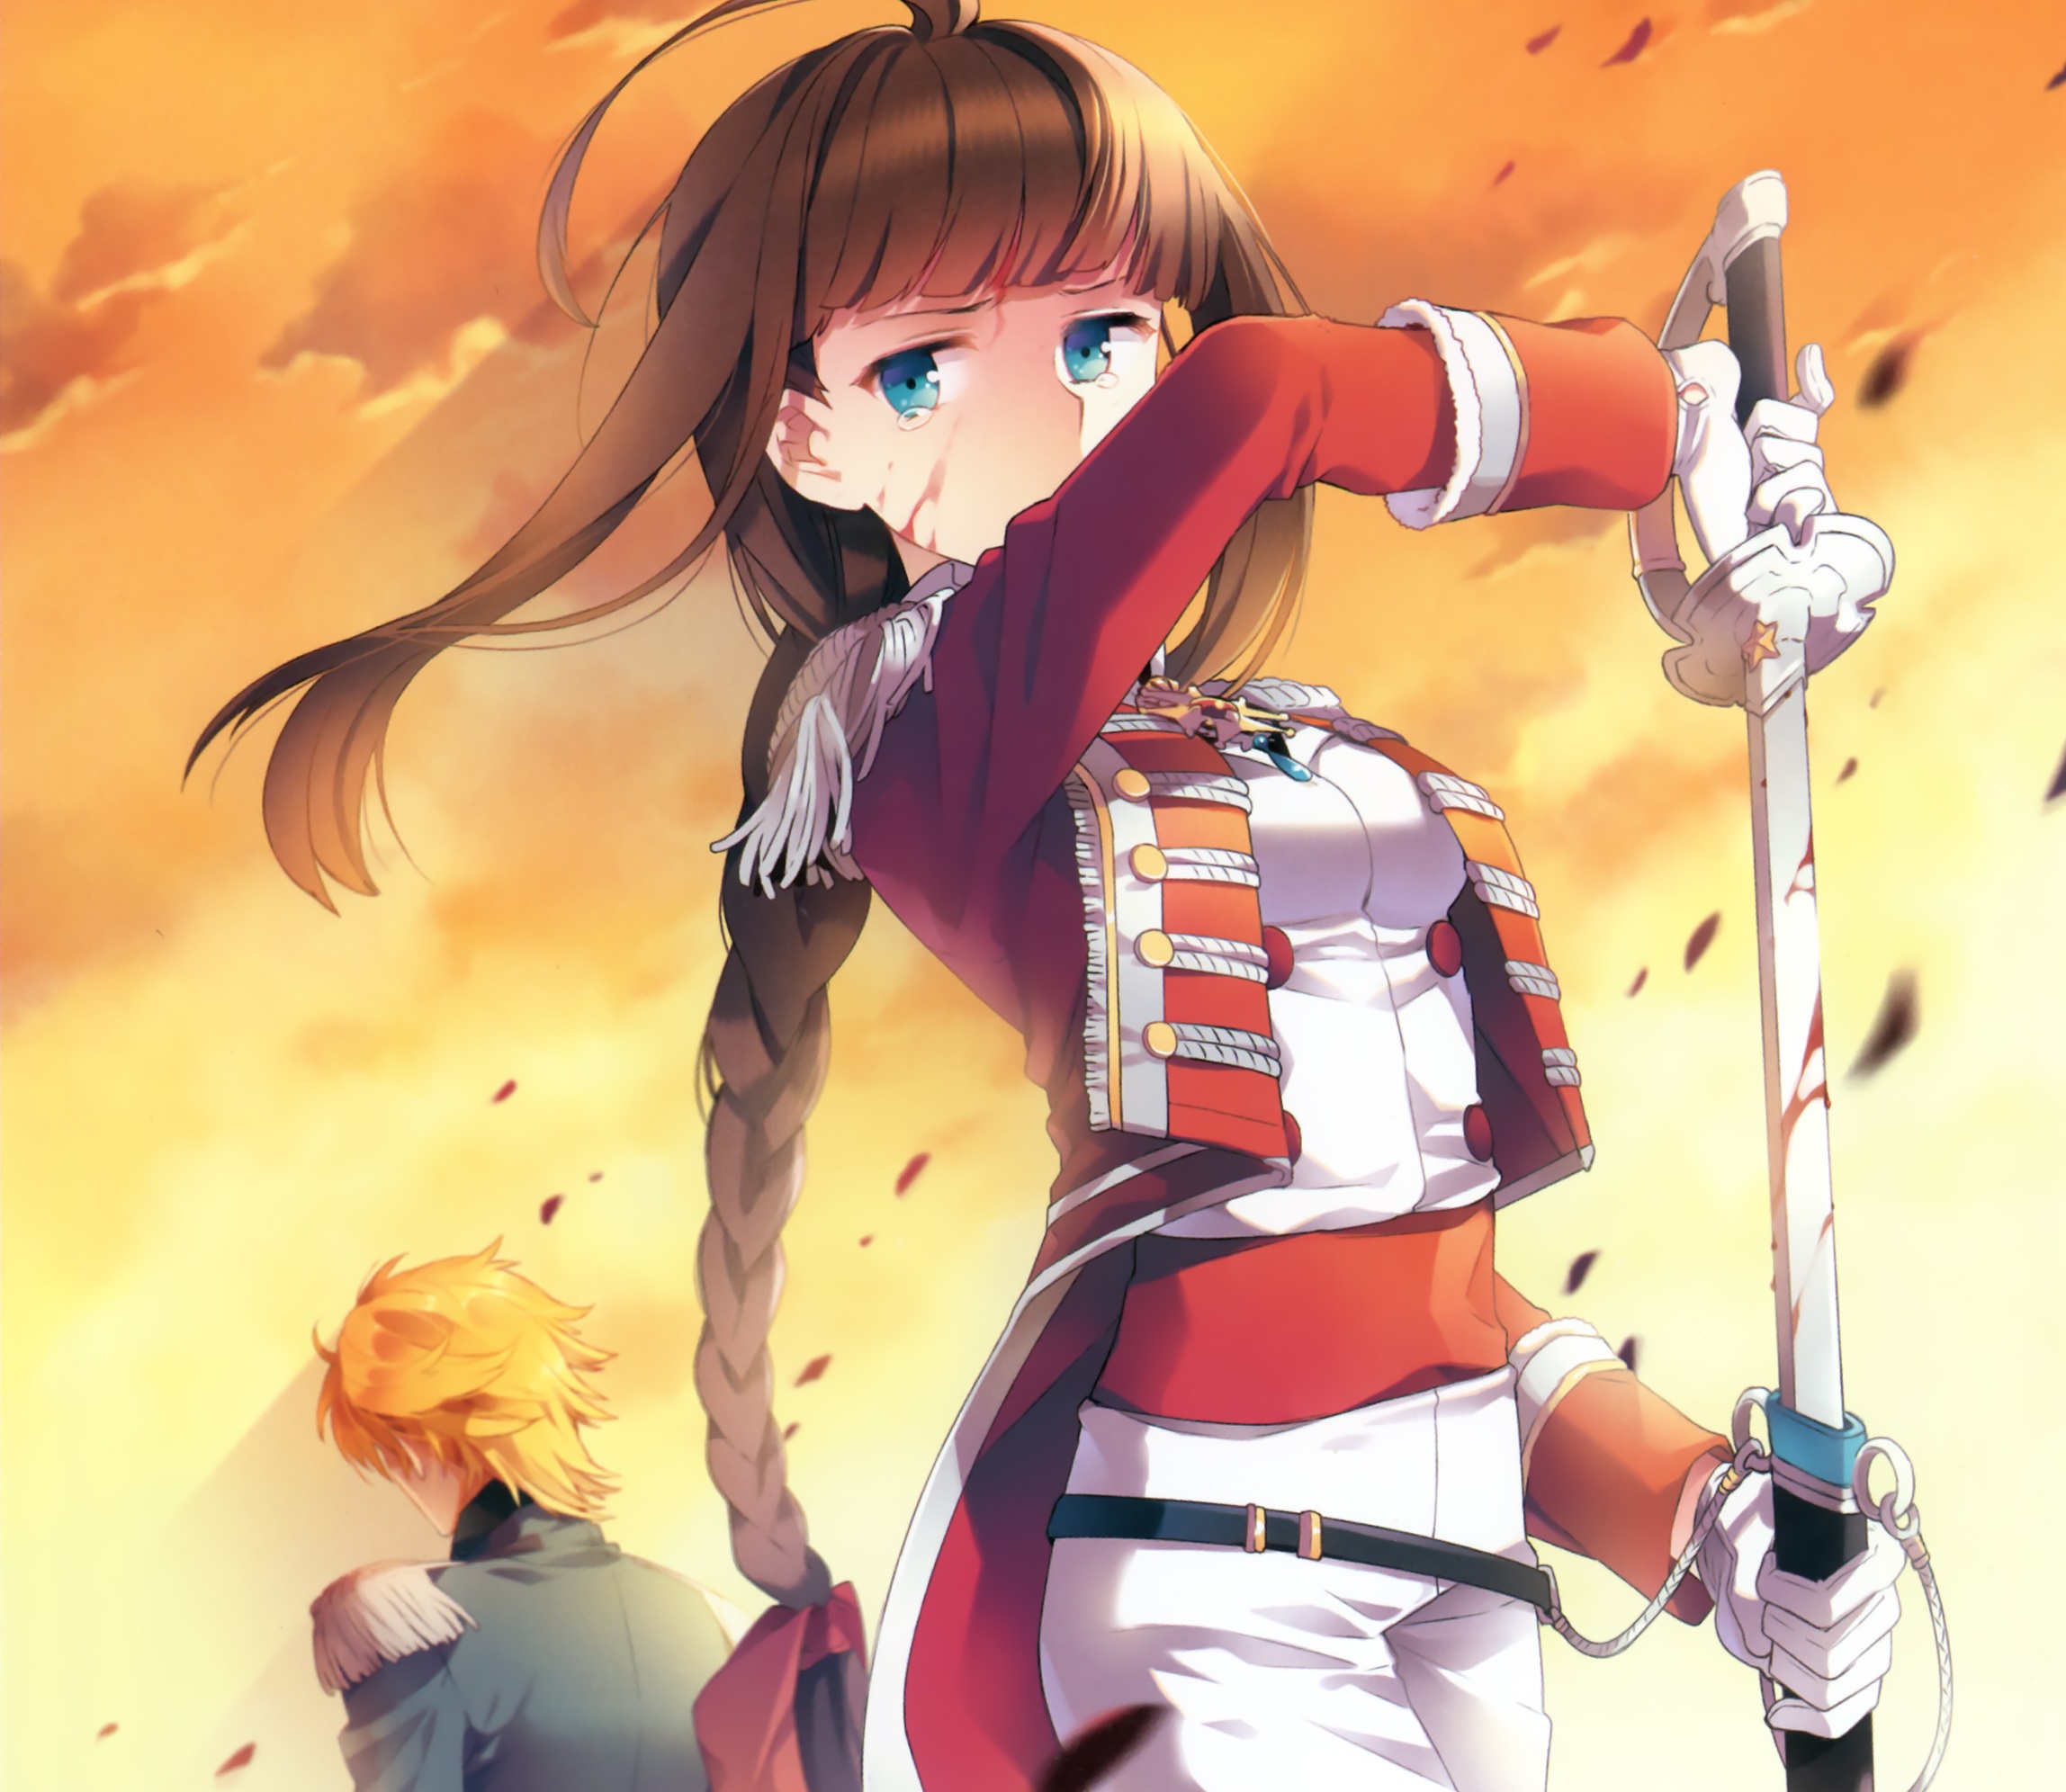 Anime Girl With Brown Hair And Sword